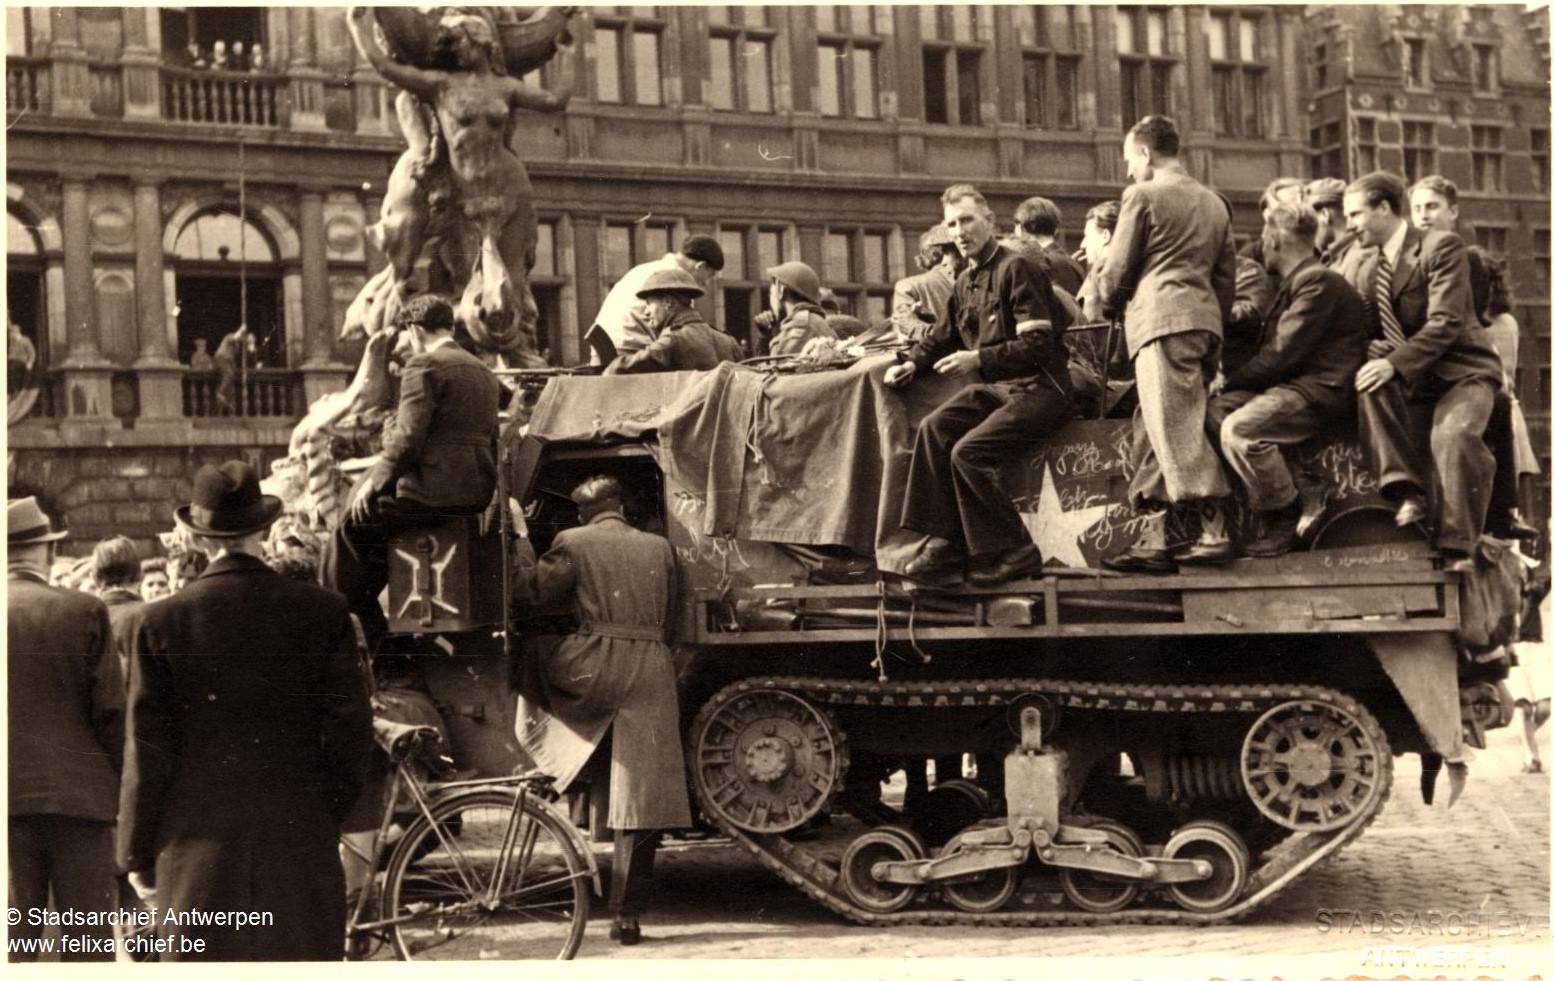 Antwerp during the Second World War